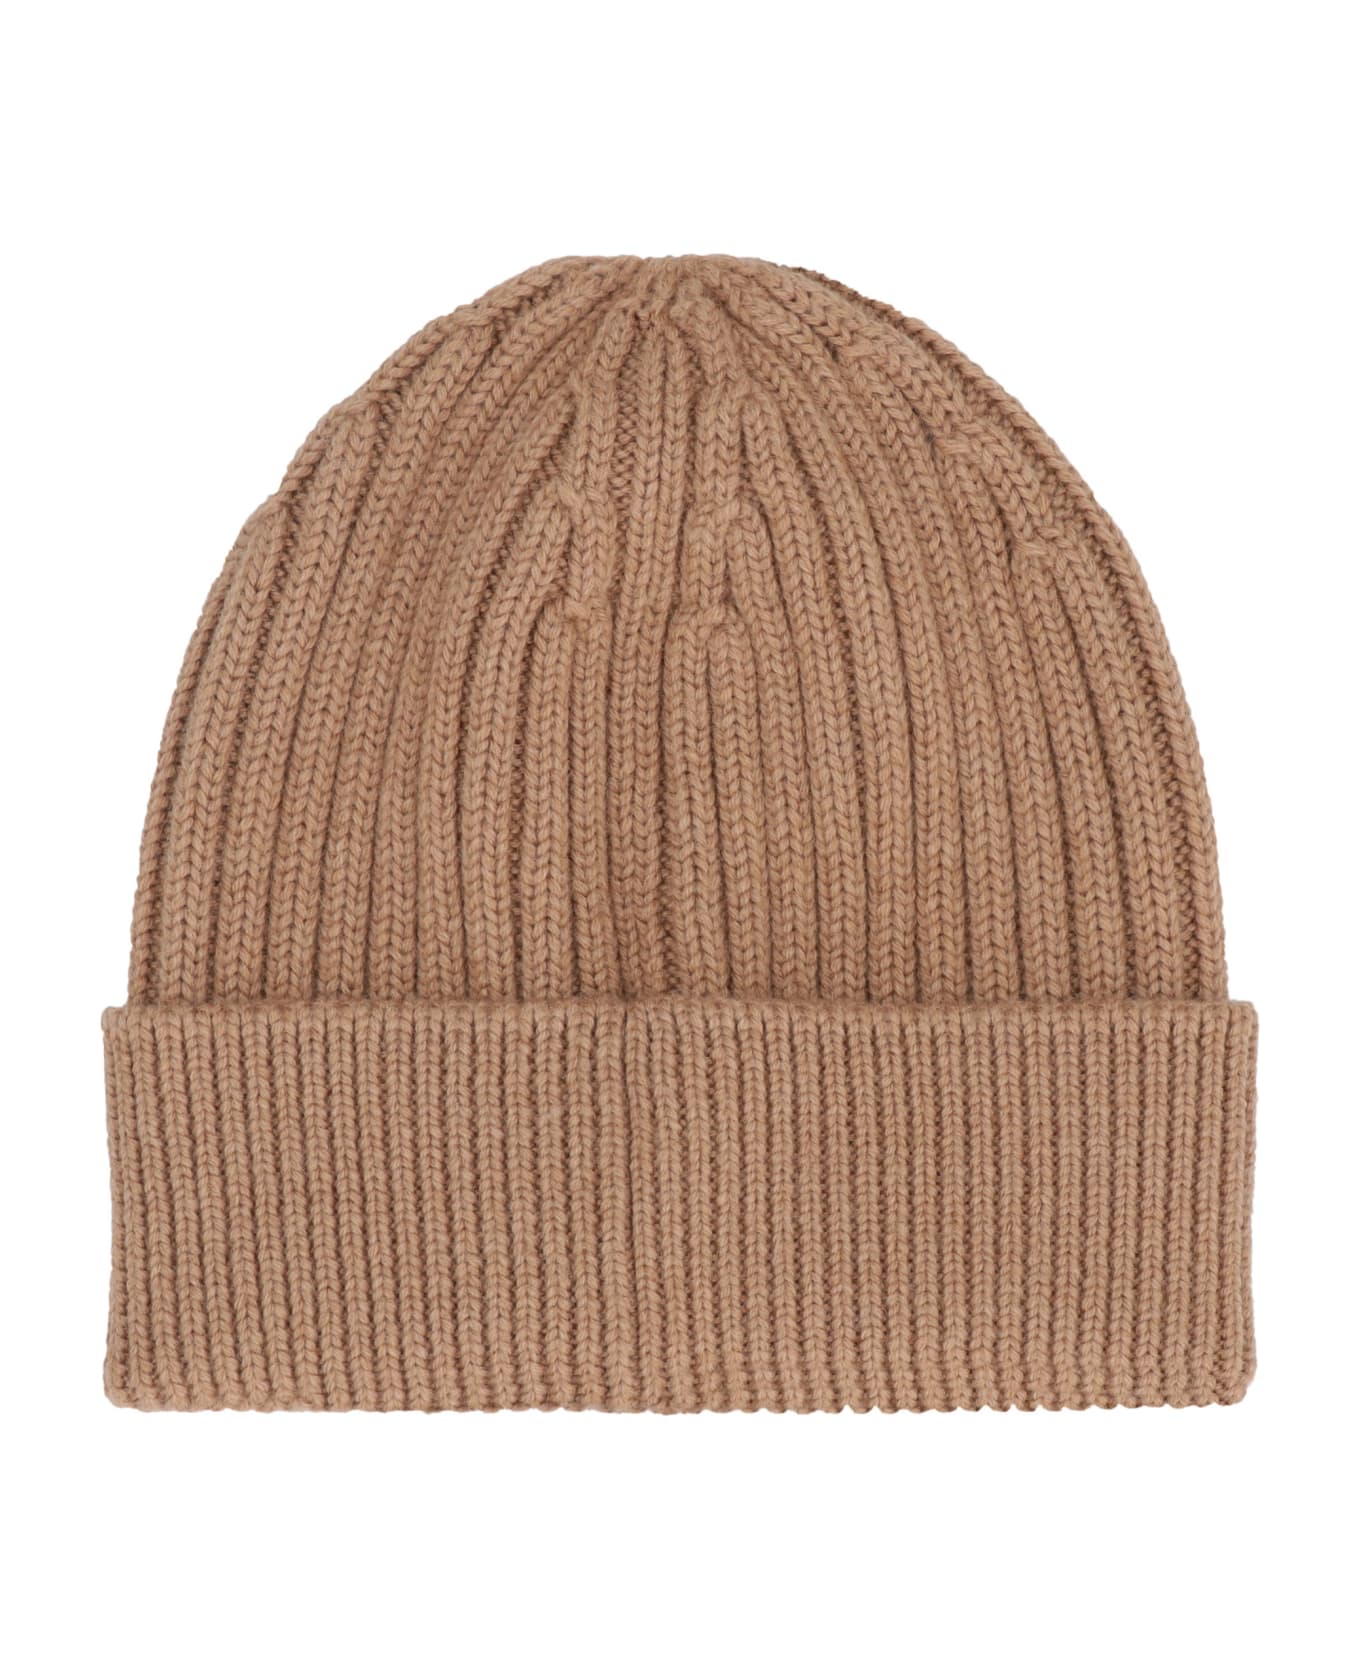 Moncler Grenoble Ribbed Knit Beanie - Camel 帽子